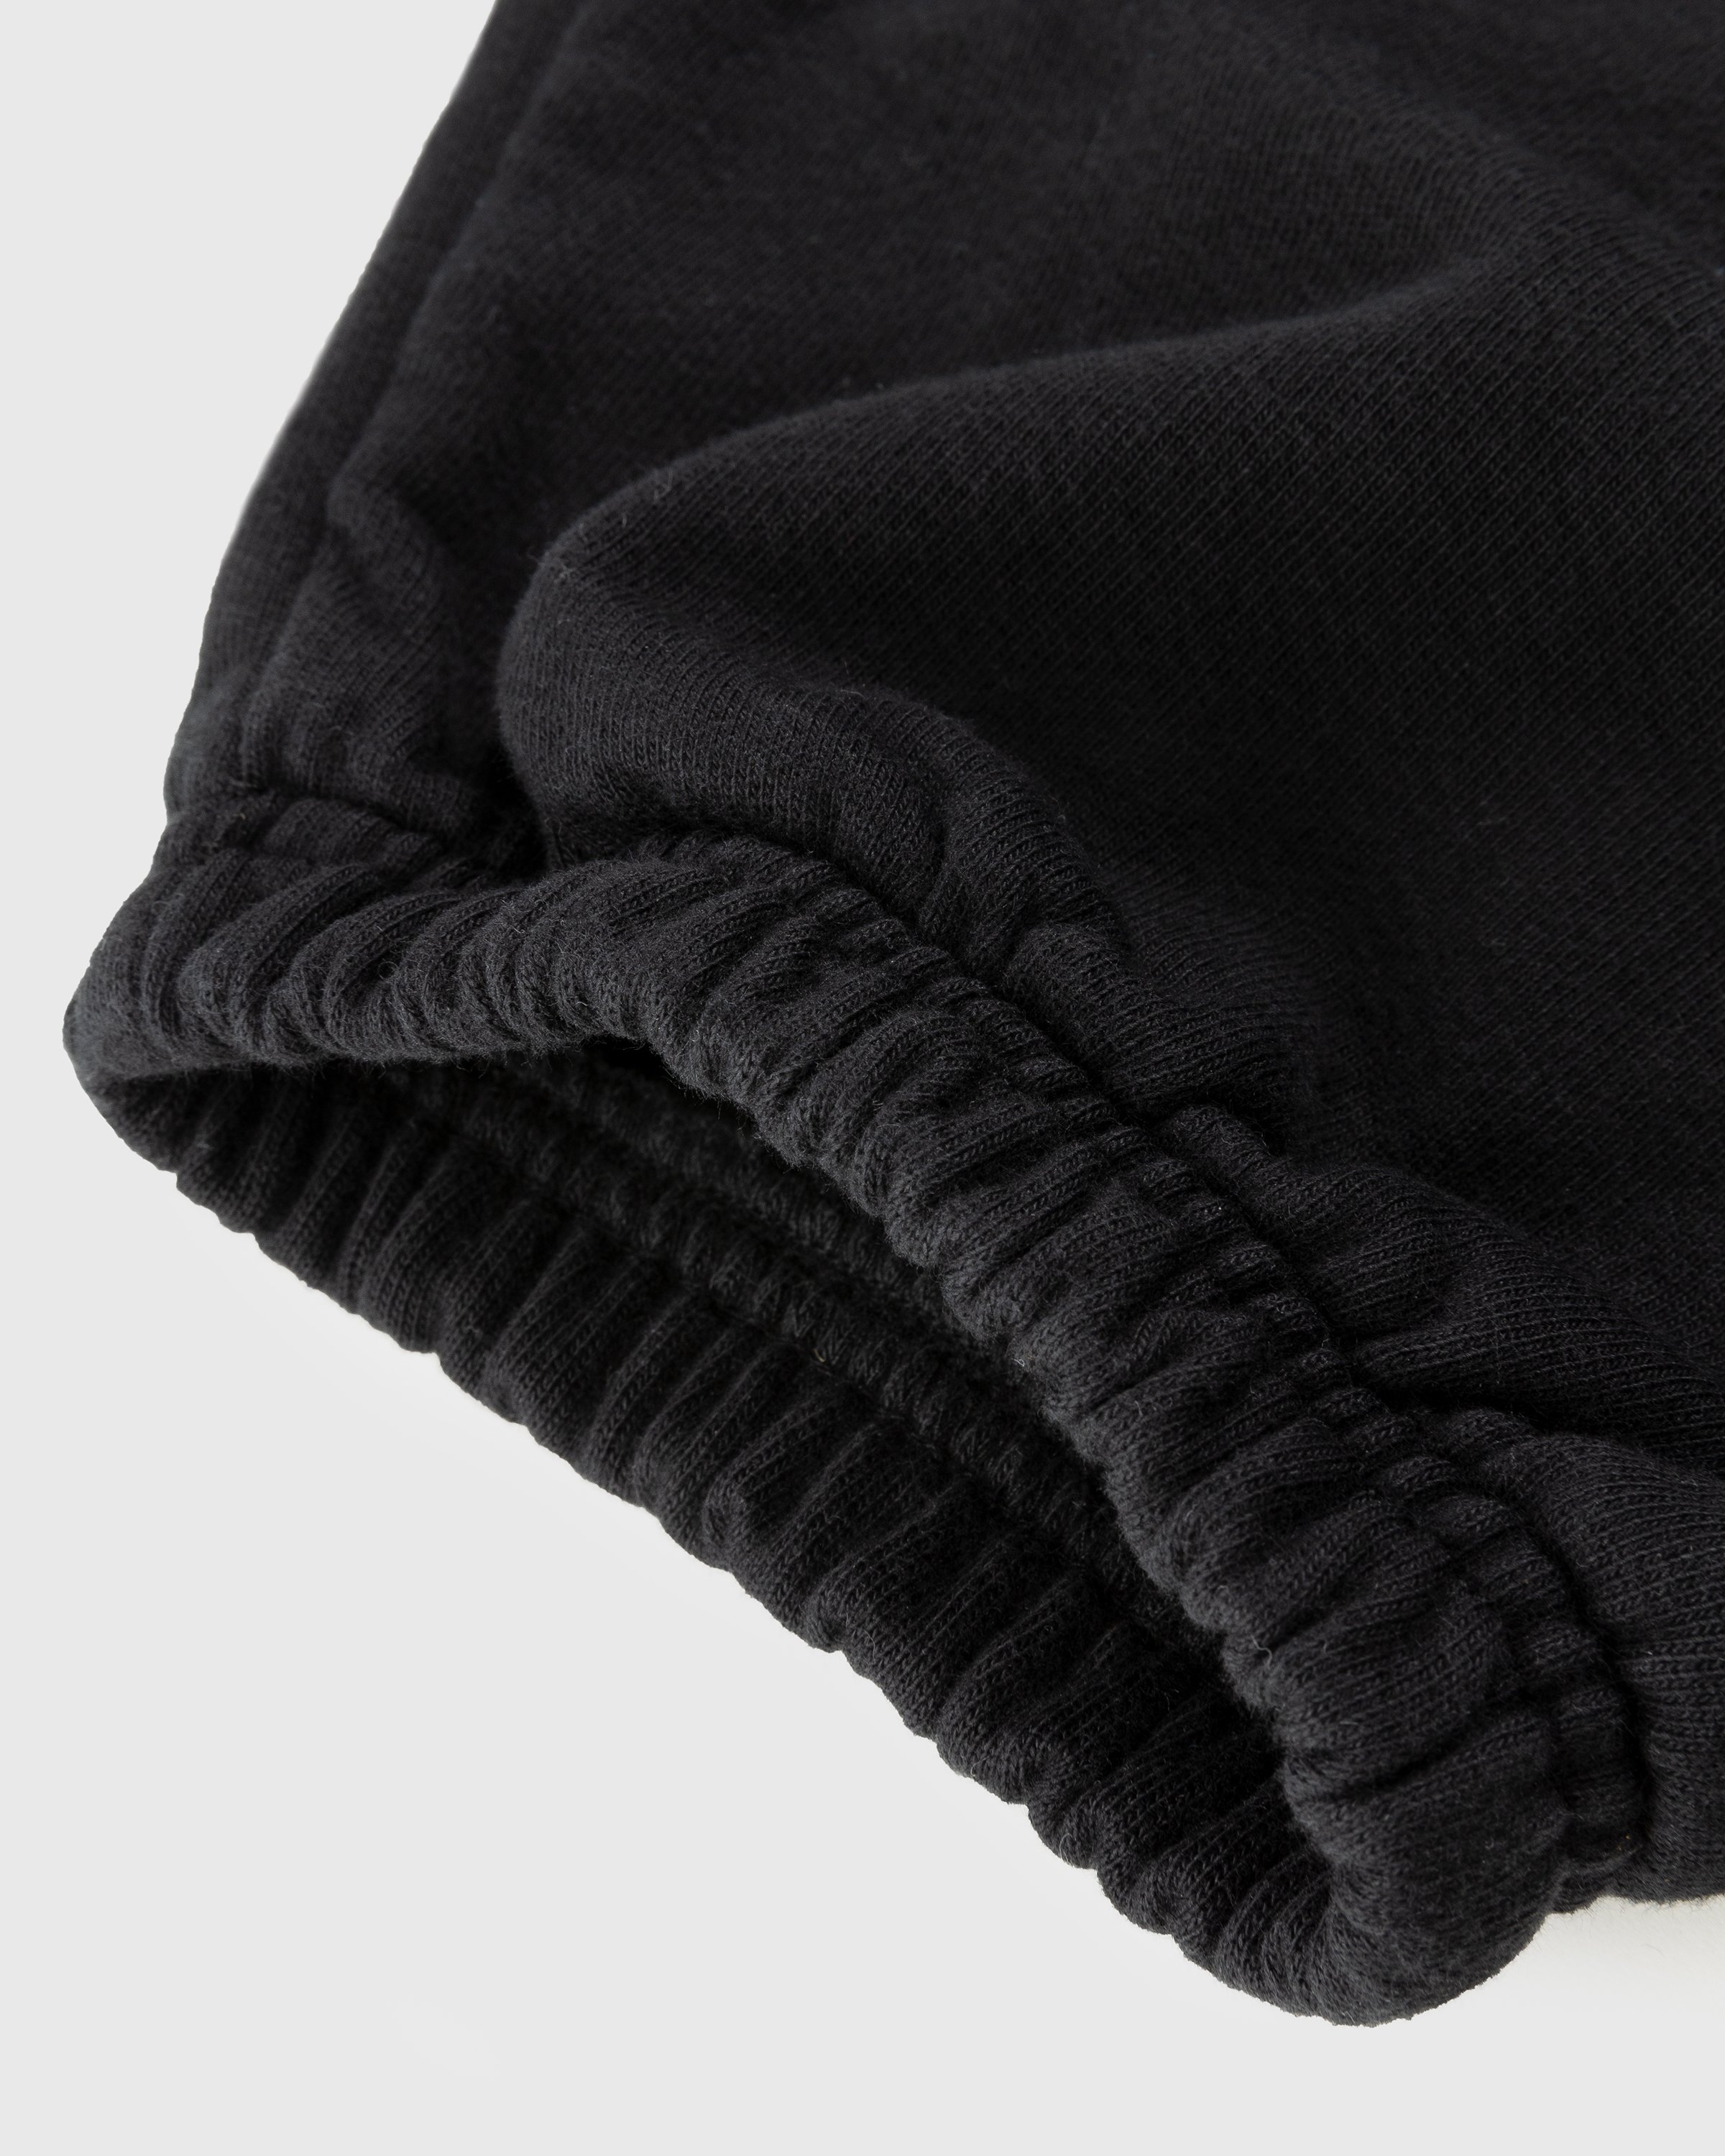 Bstroy x Highsnobiety - Not In Paris 4 Flower Sweatpants Black - Clothing - Black - Image 3